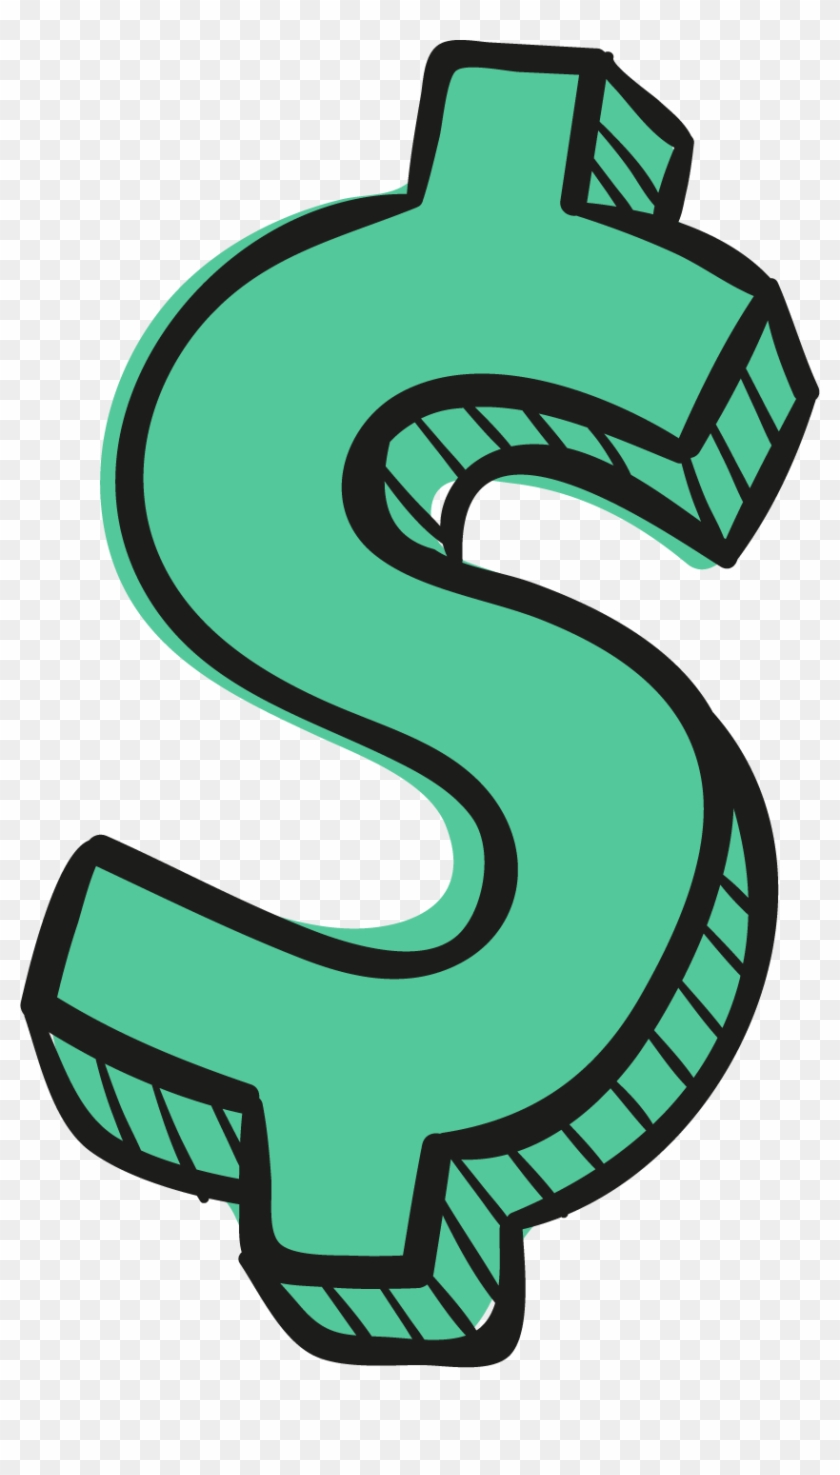 Drawing Money United States Dollar Dessin Animxe9 Clip - Drawing Money United States Dollar Dessin Animxe9 Clip #345485